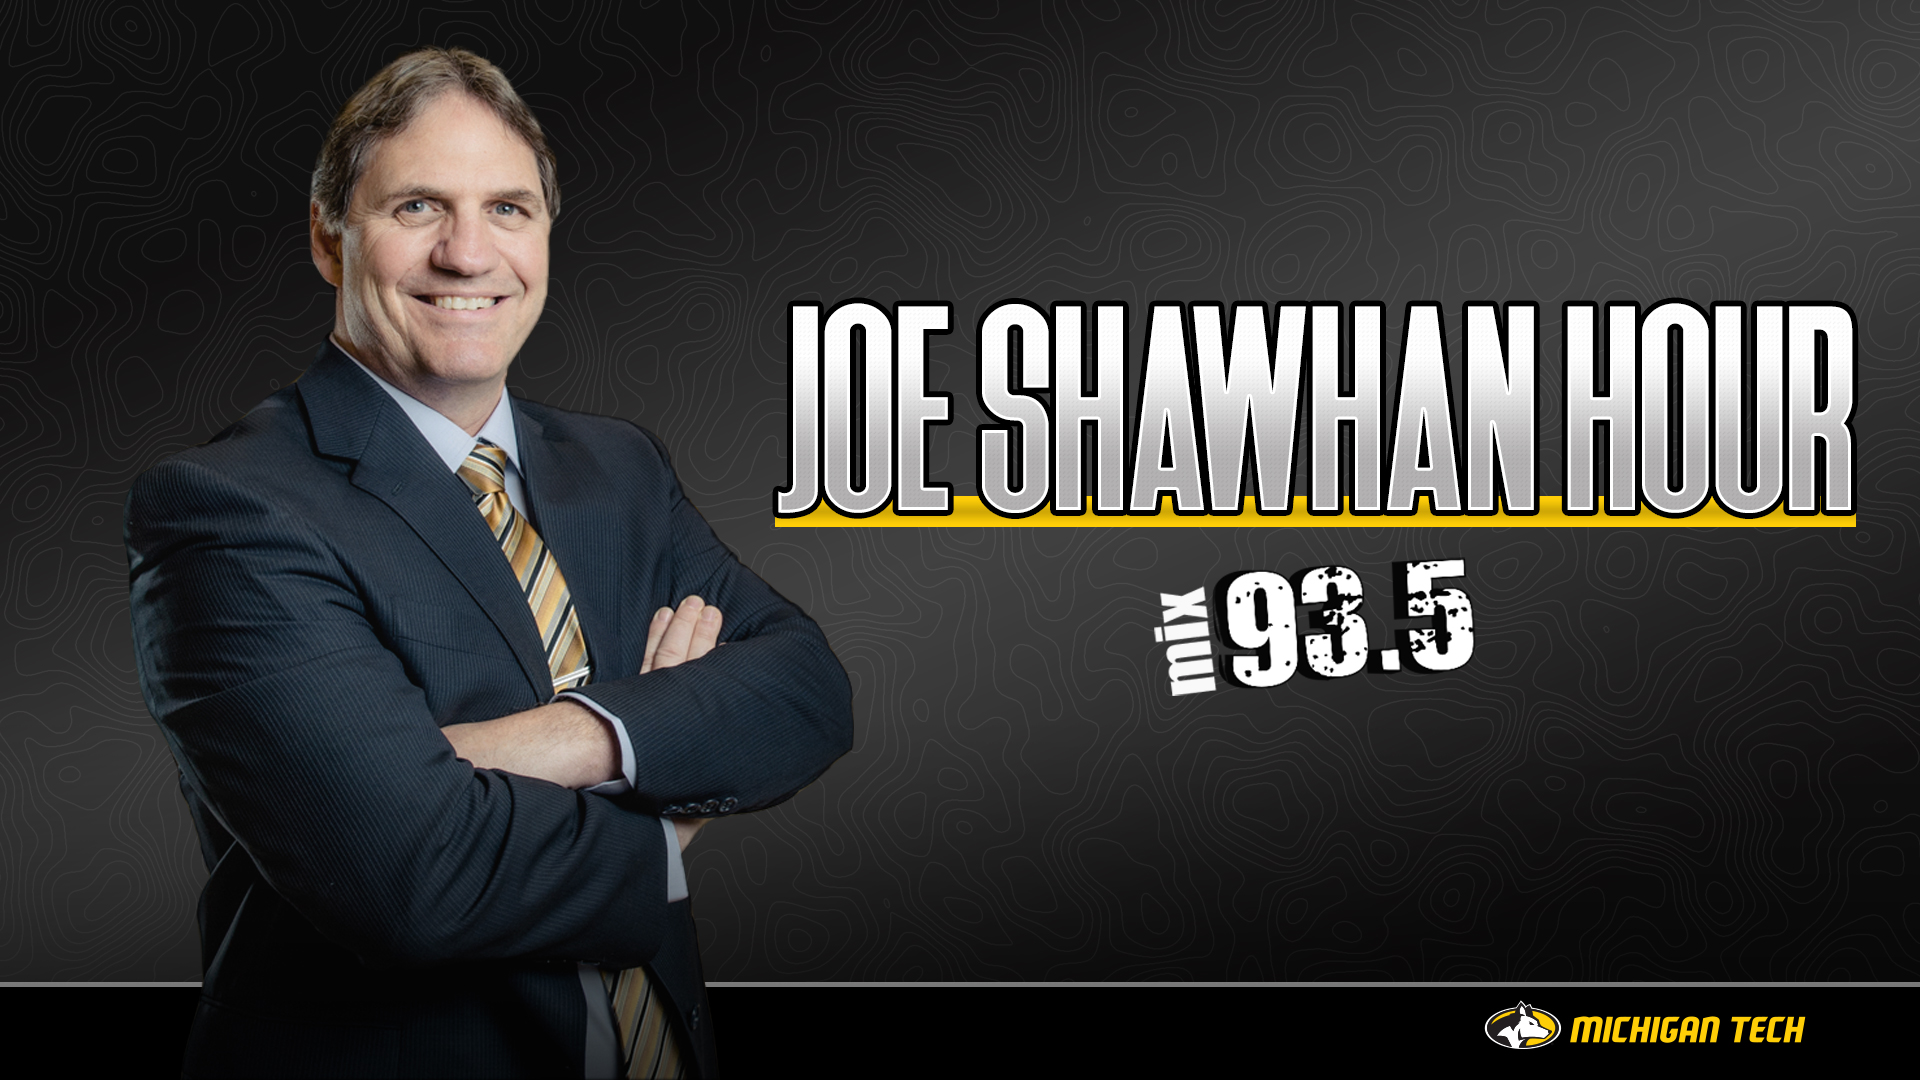 The Joe Shawhan Hour